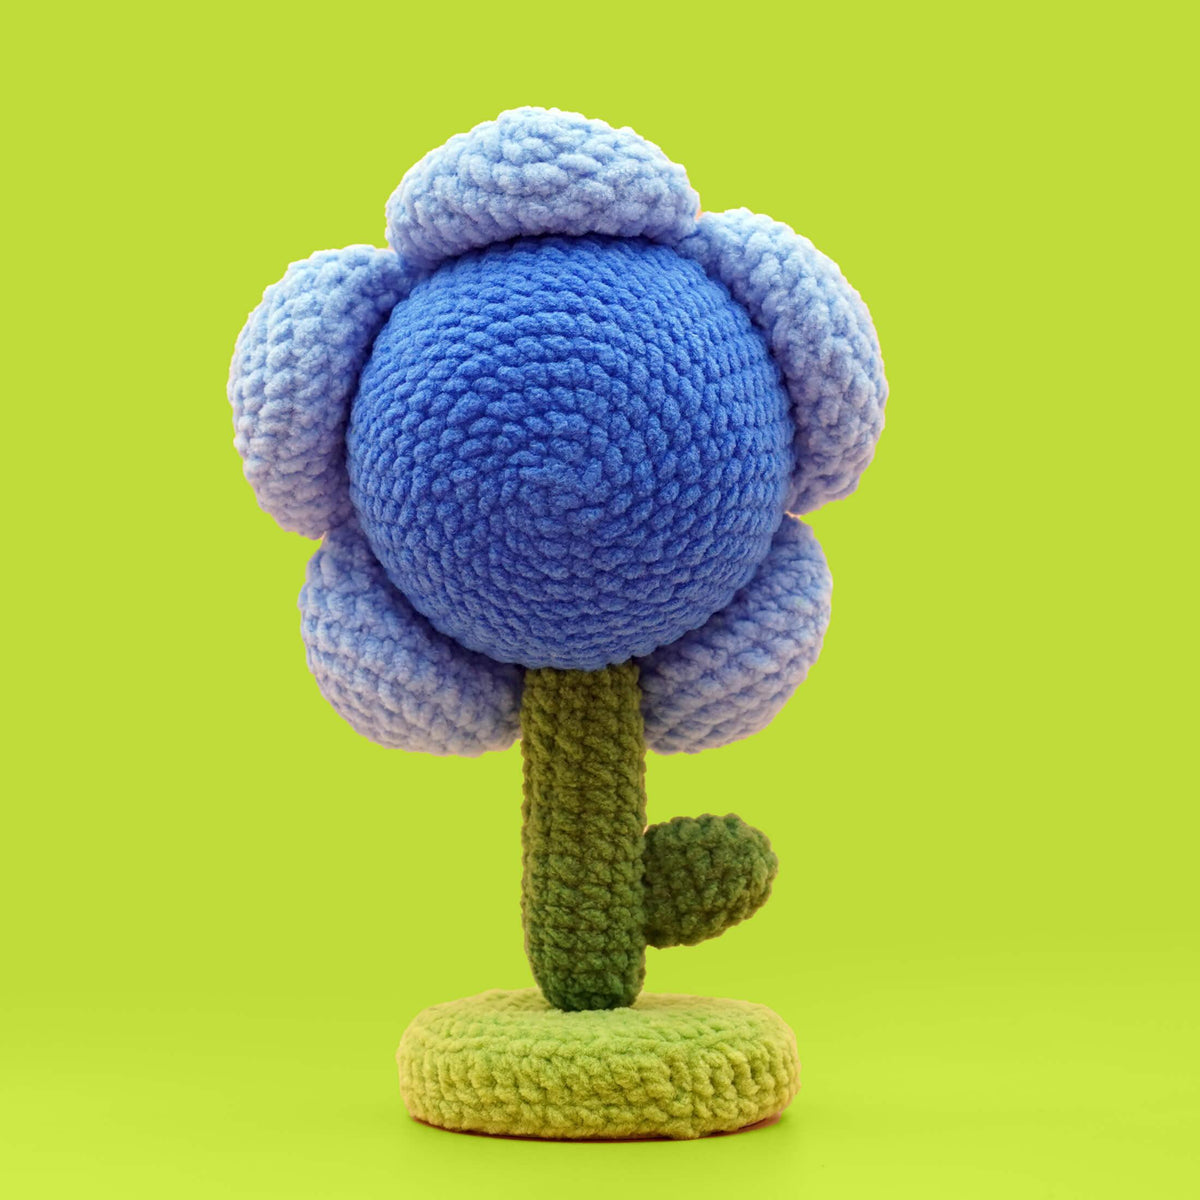 Crochet Flower Amigurumi And Crochet Kit